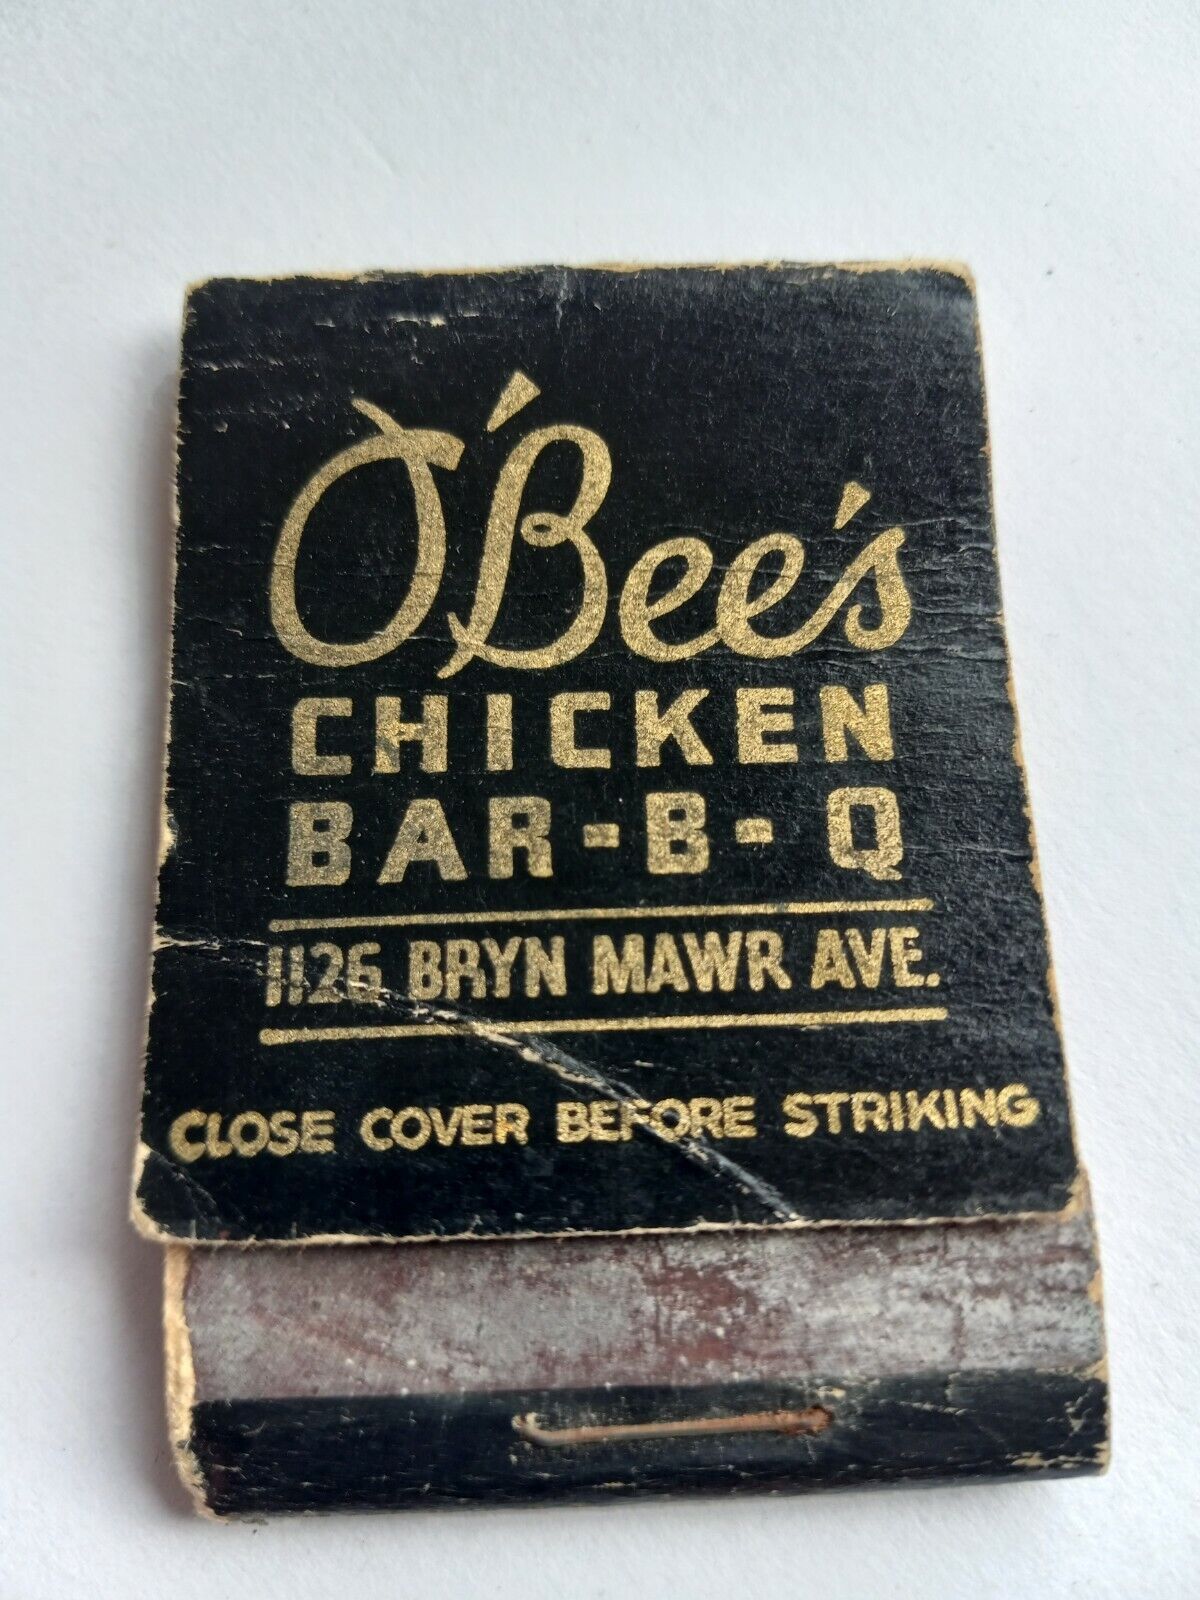 Bryn Mawr Avenue. Long Beach. O' Bee's chicken bar-b-q Matchbook